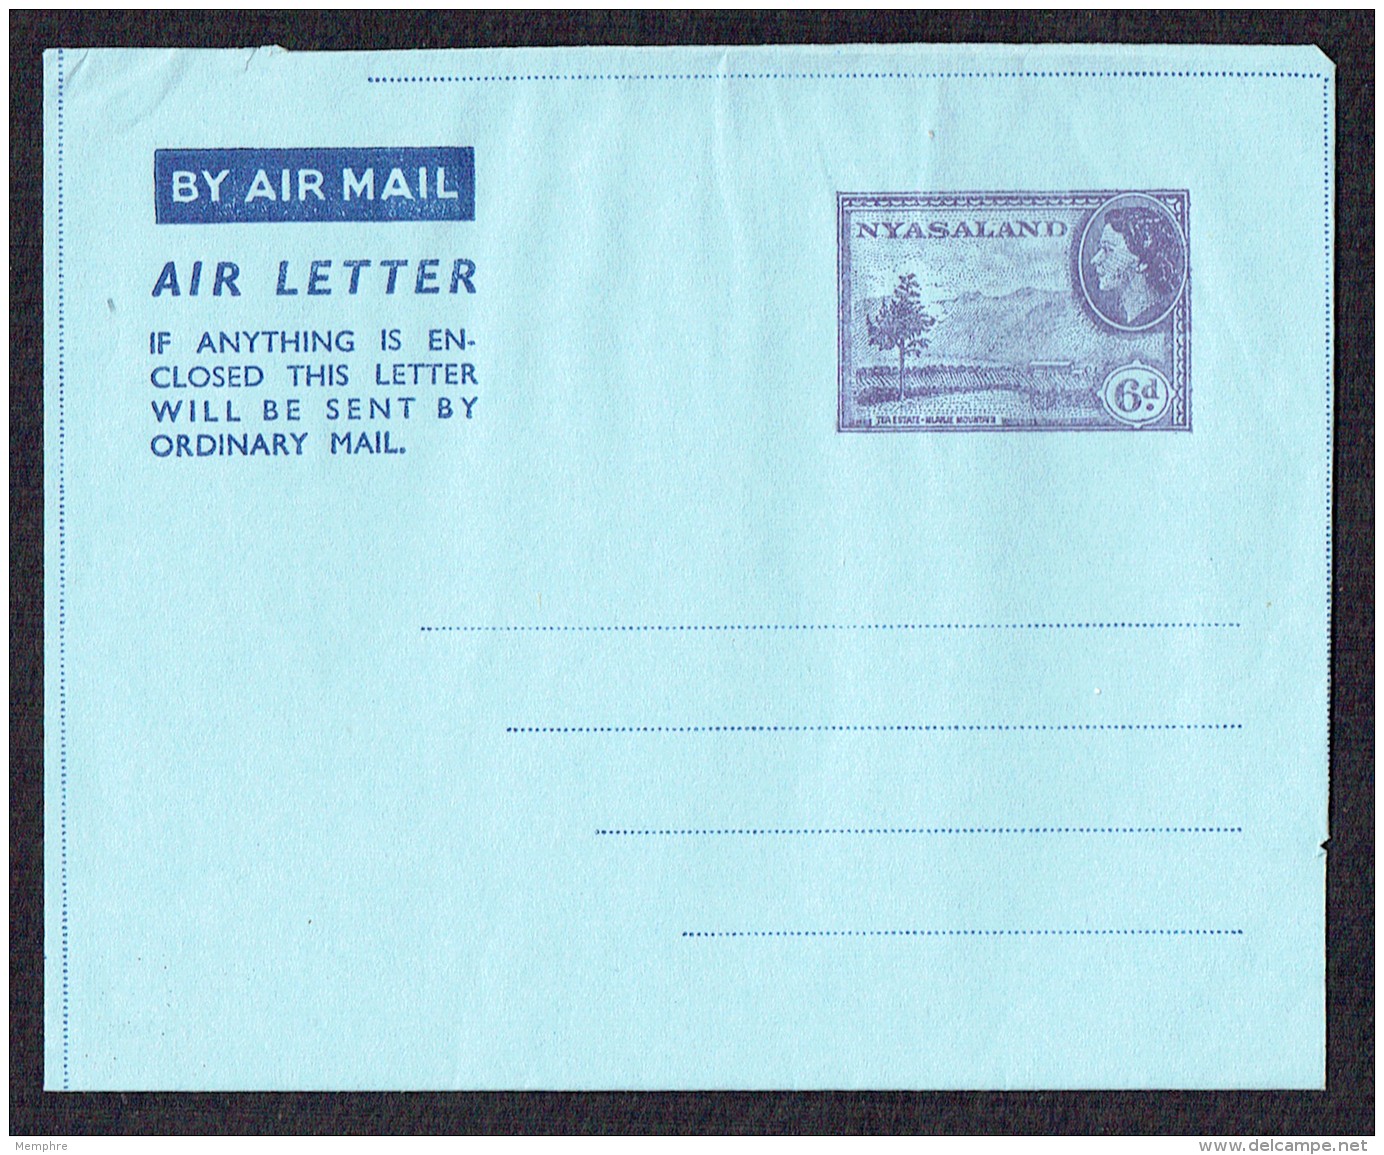 NYASSALAND  Qn Elizabeth 6d Air Letter - Unused - Nyasaland (1907-1953)